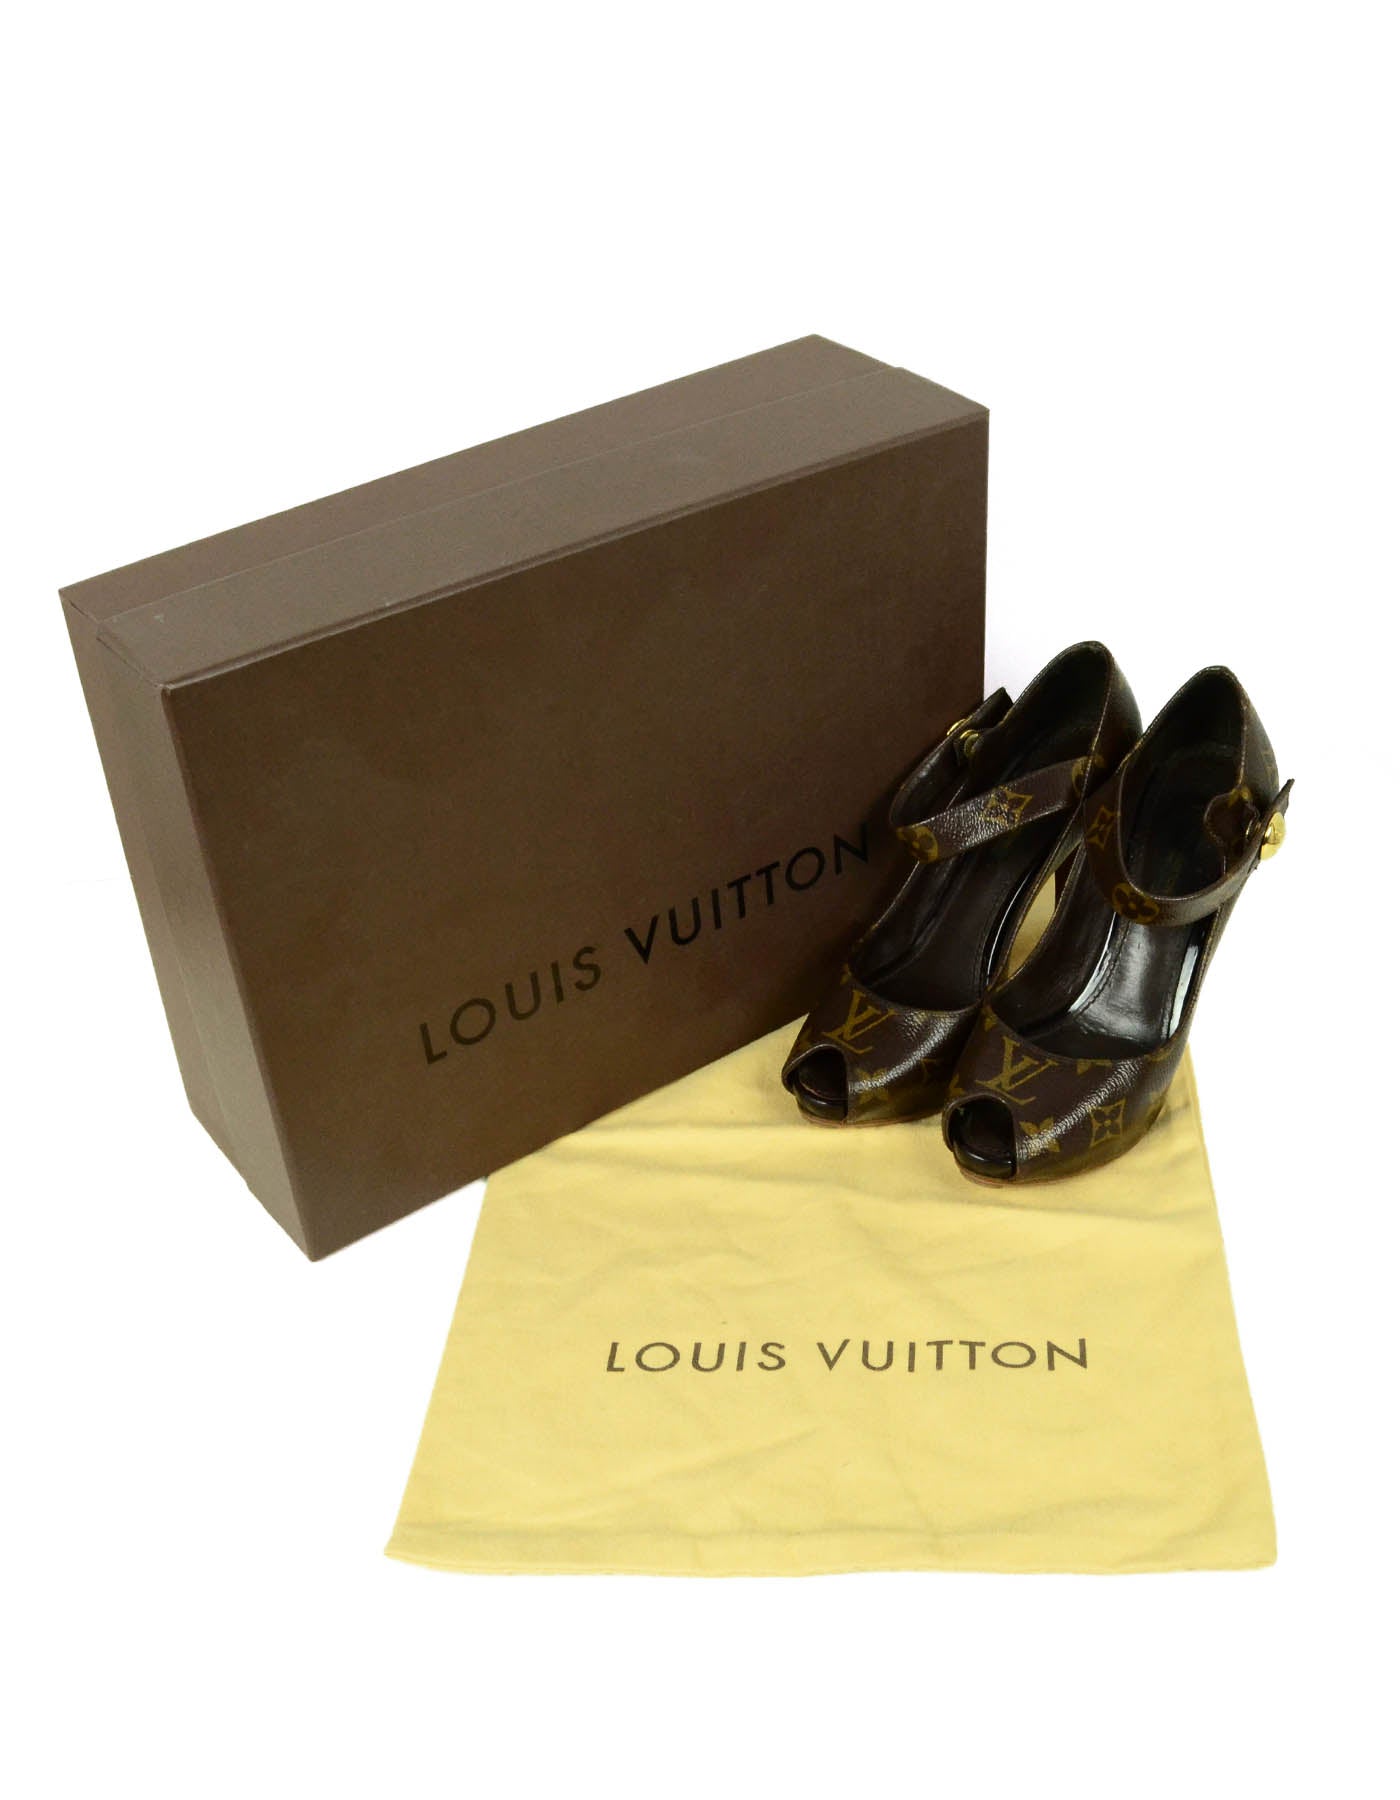 Louis Vuitton Monogram Canvas Ritual Mary Jane Pumps sz 34.5